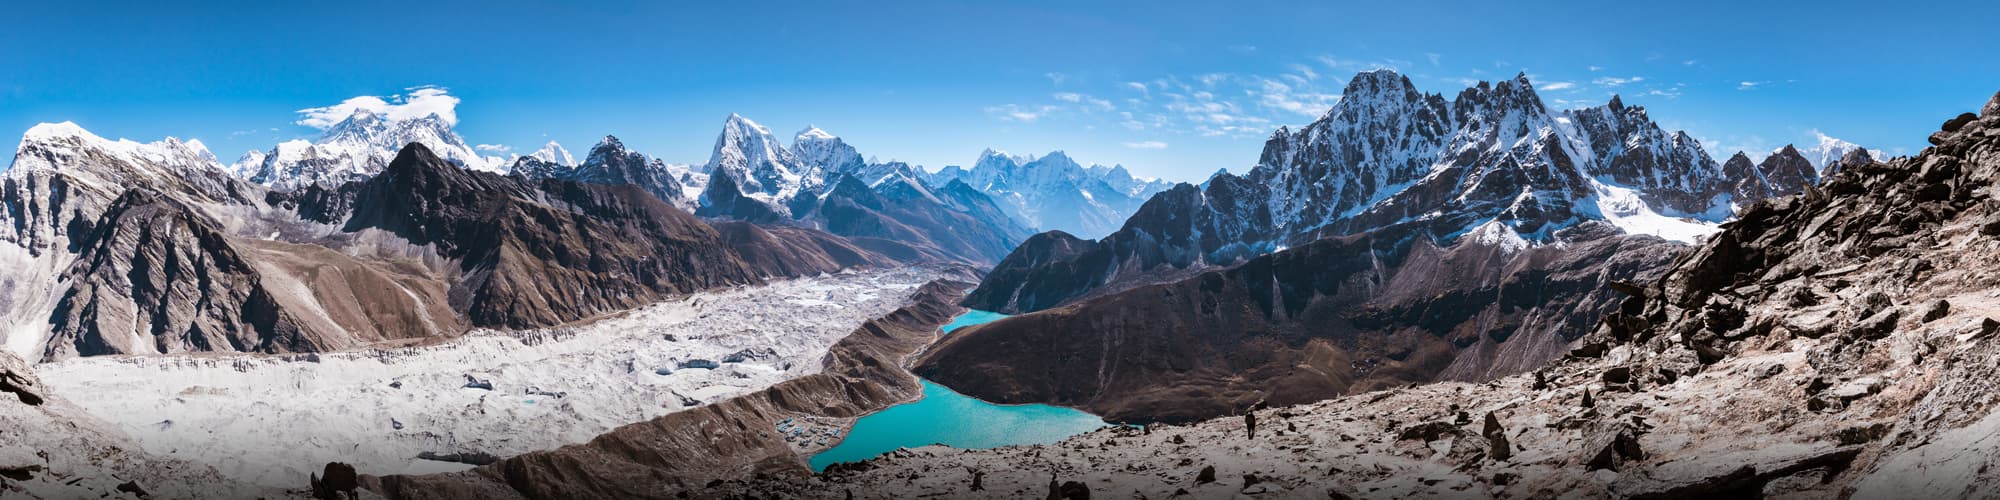 Trek au Népal © Rmnunes / iStock